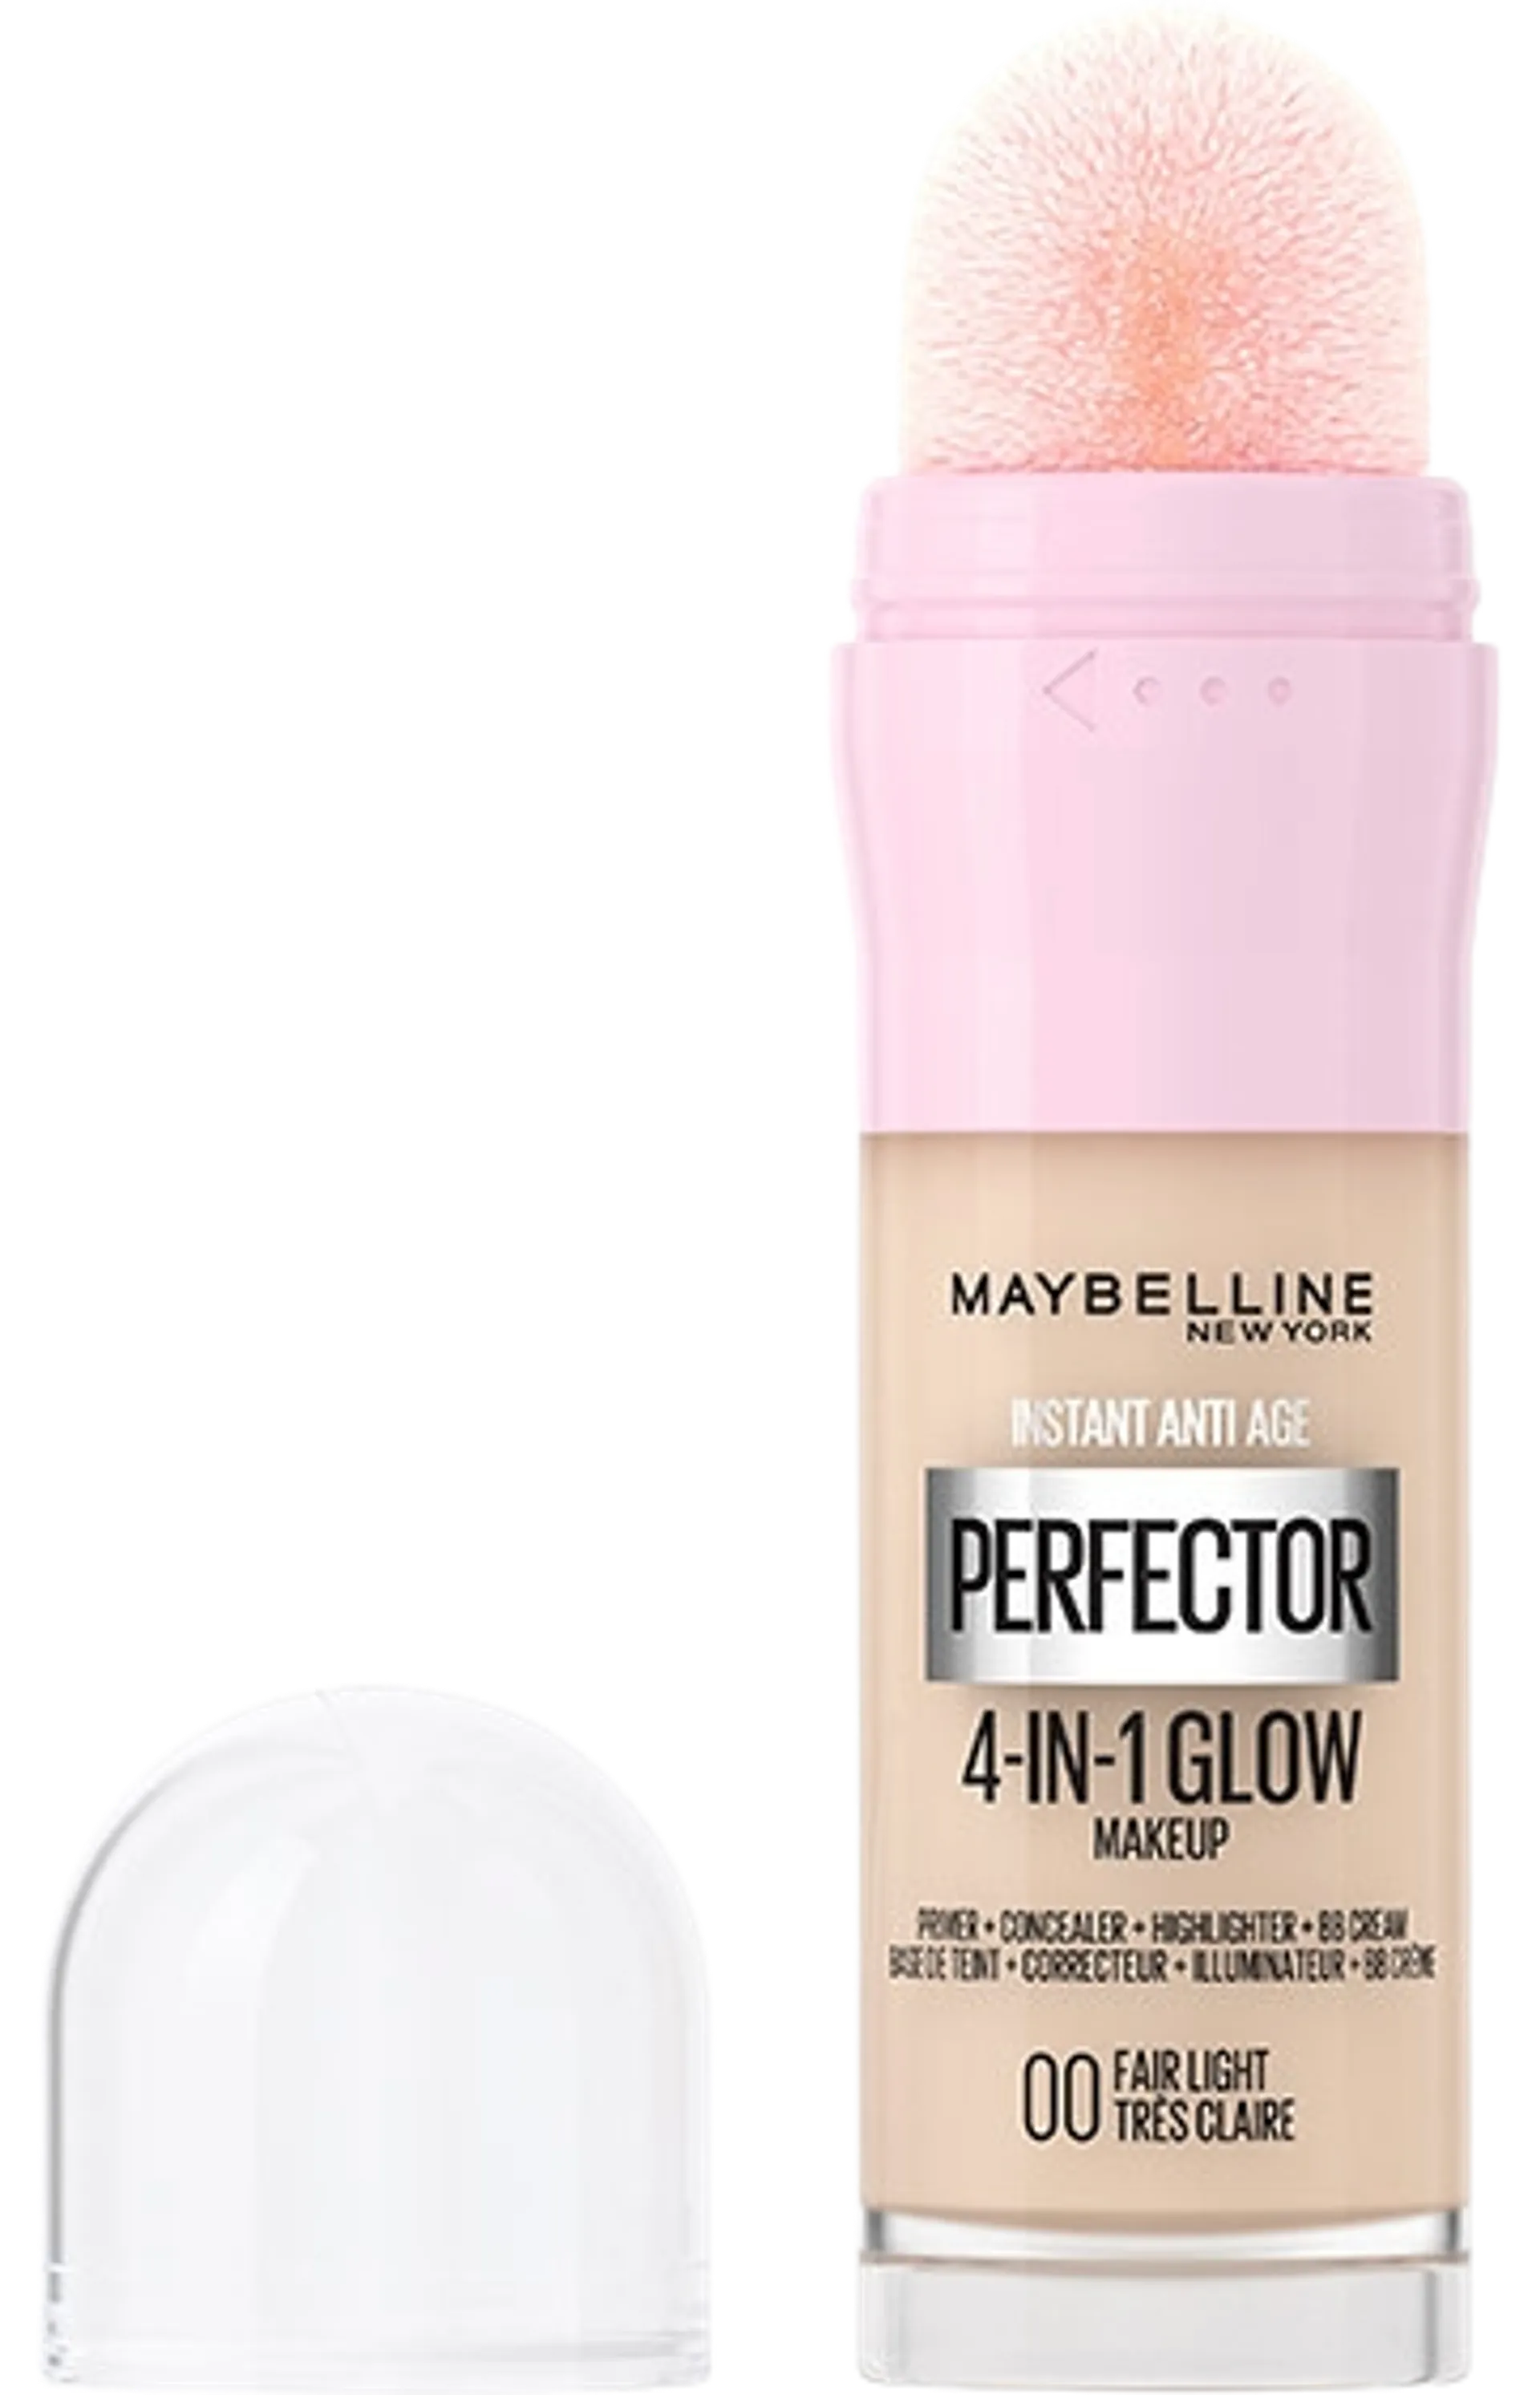 Maybelline New York Instant Perfector 4-in-1 Glow 00 FAIR LIGHT Meikkivoide 20 ml - Fair Light - 2